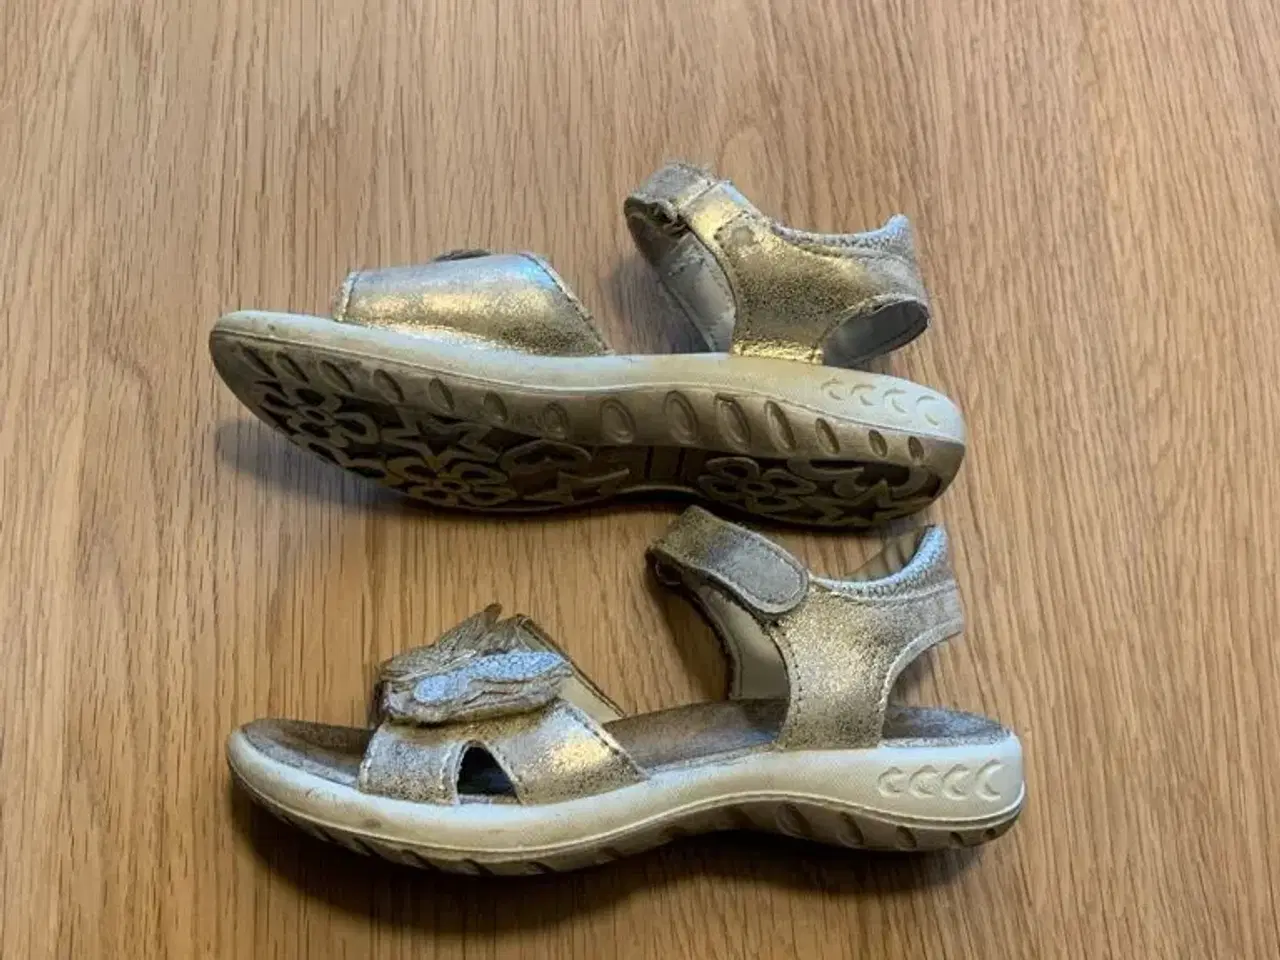 Billede 3 - iMac sandaler i gul/sølv str. 29